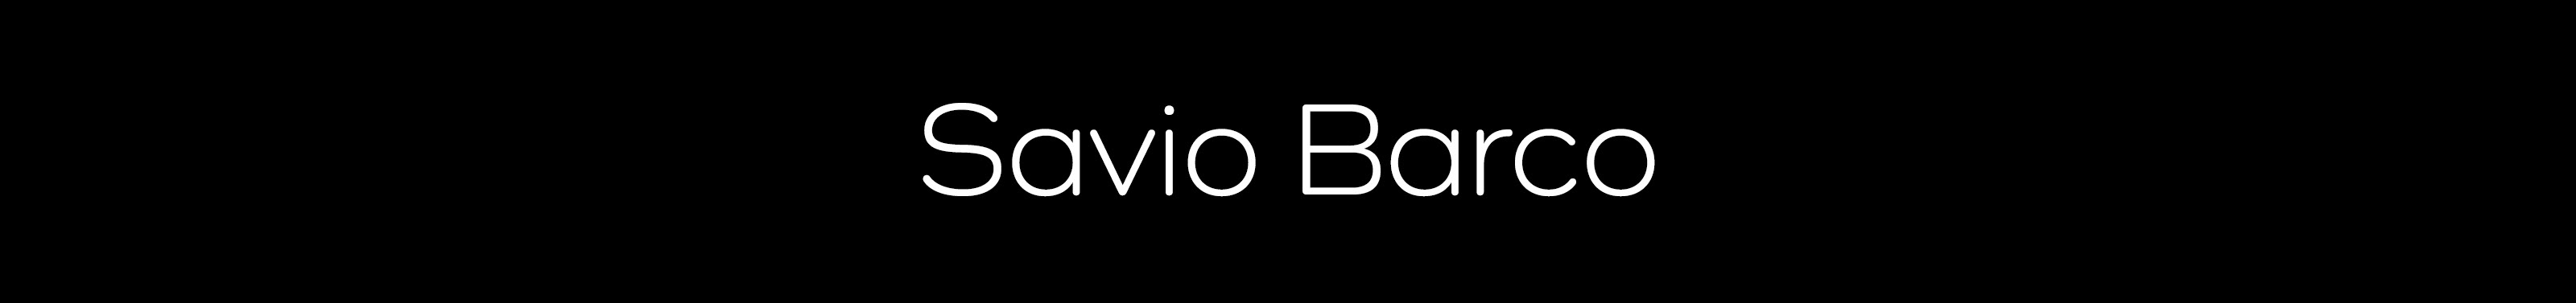 Savio Barco's profile banner